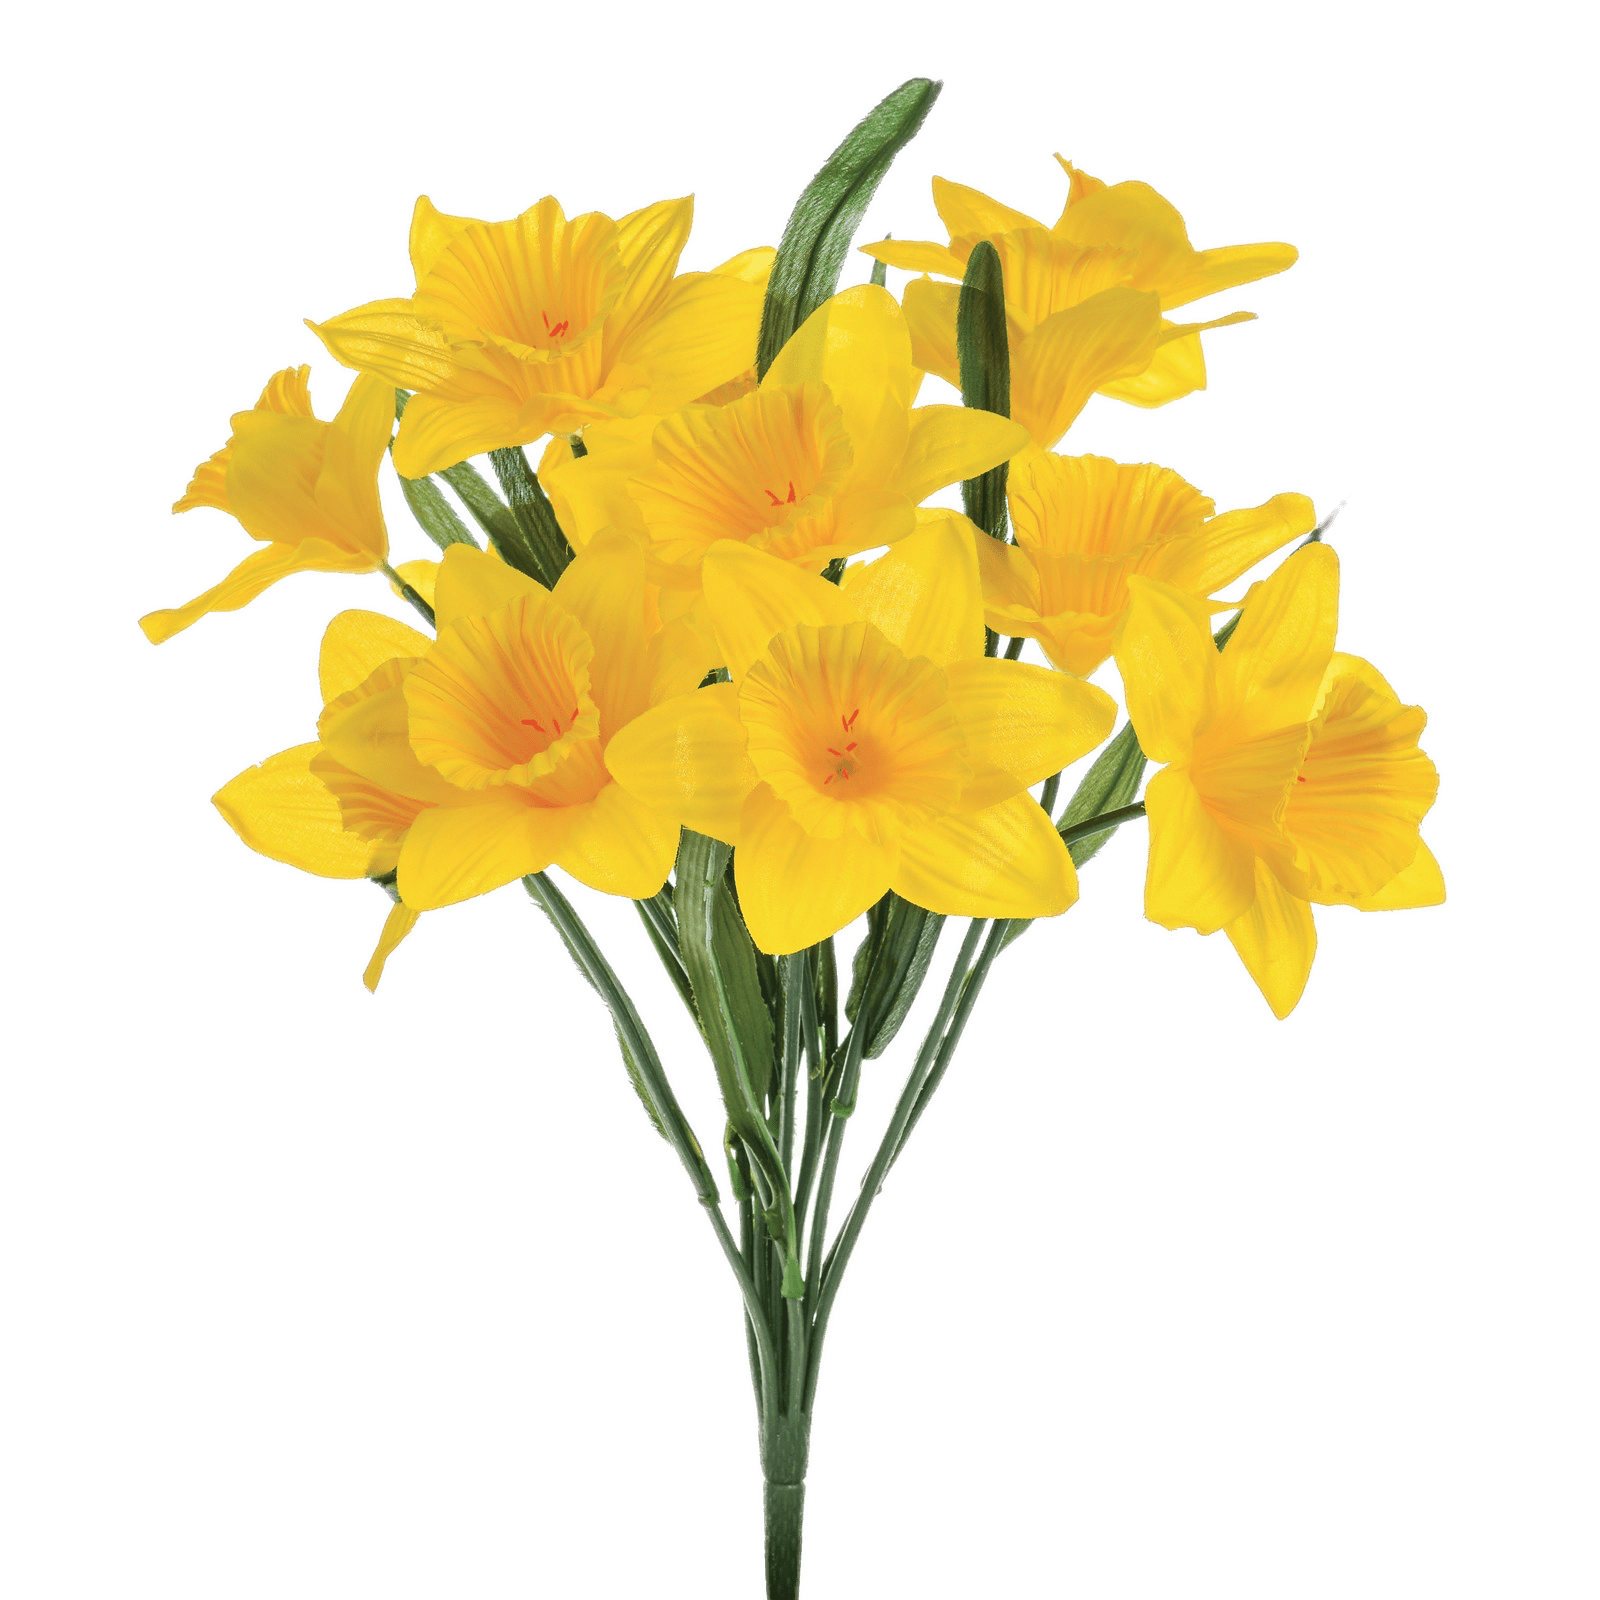 Daffodils Images